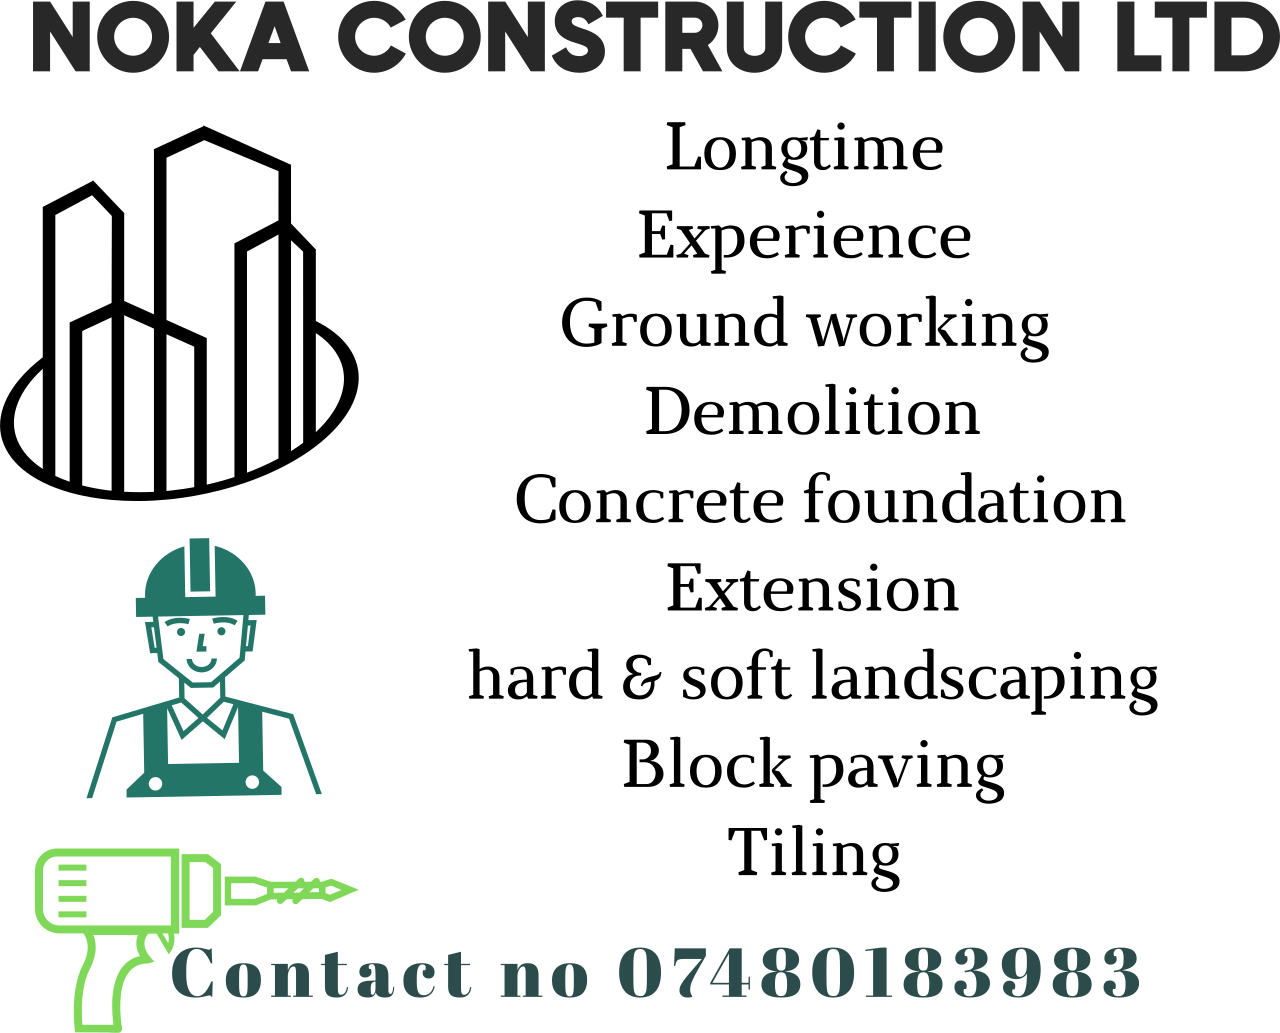 Noka construction ltd's logo